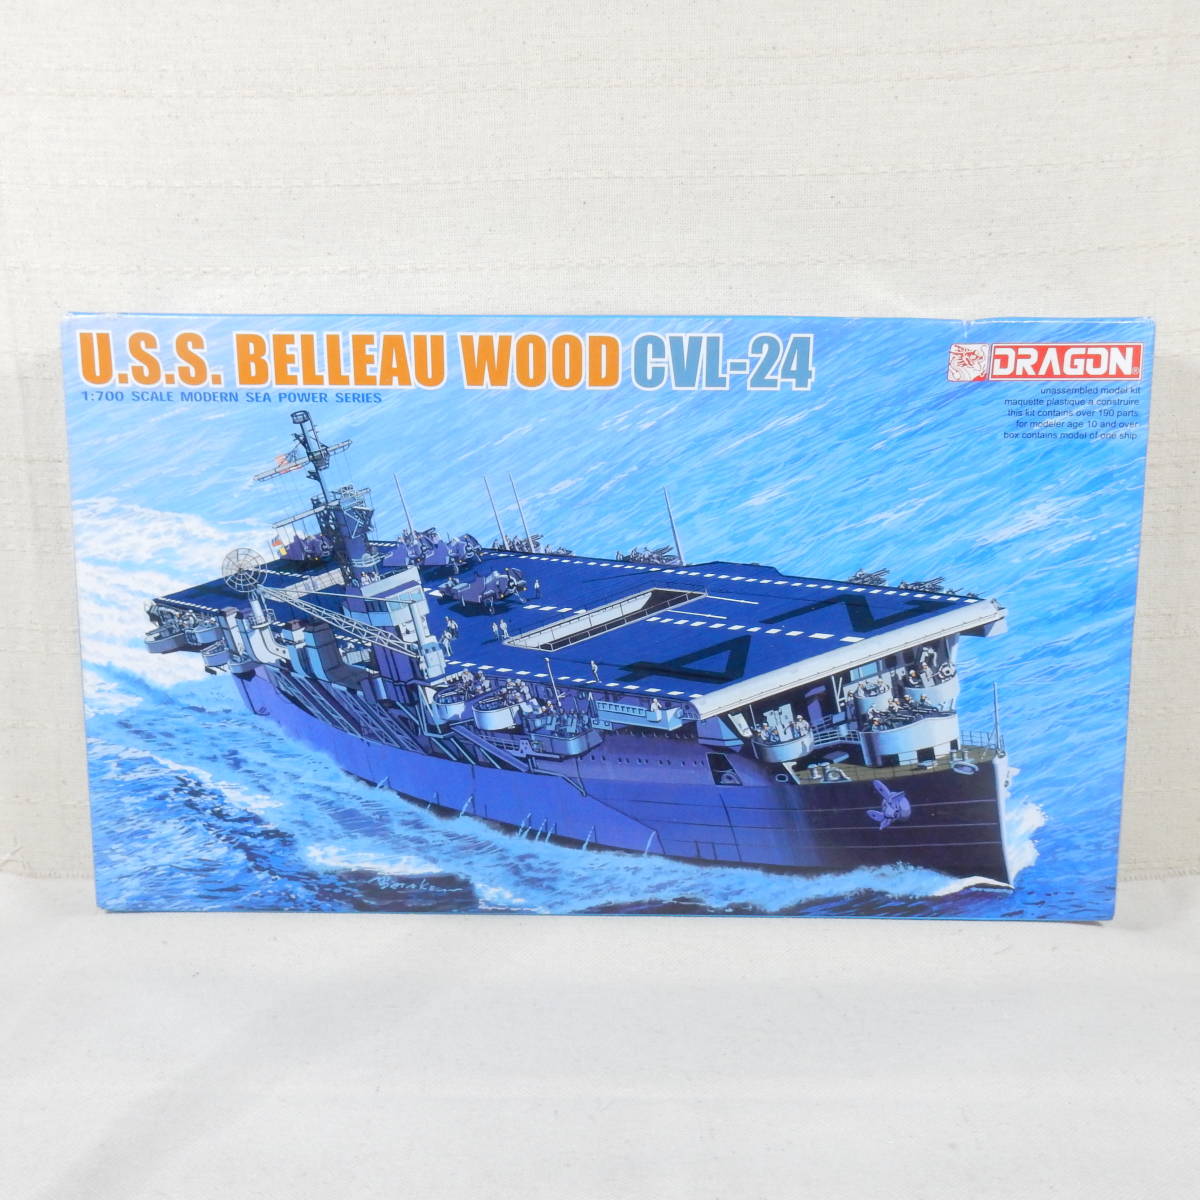 (18160) U.S.S. BELLEAU WOOD CVL-24 アメリカ海軍航空母艦 ベロー・ウッド DRAGON 1:700 モダンシーパワーシリーズ 7058 内袋未開封_画像5